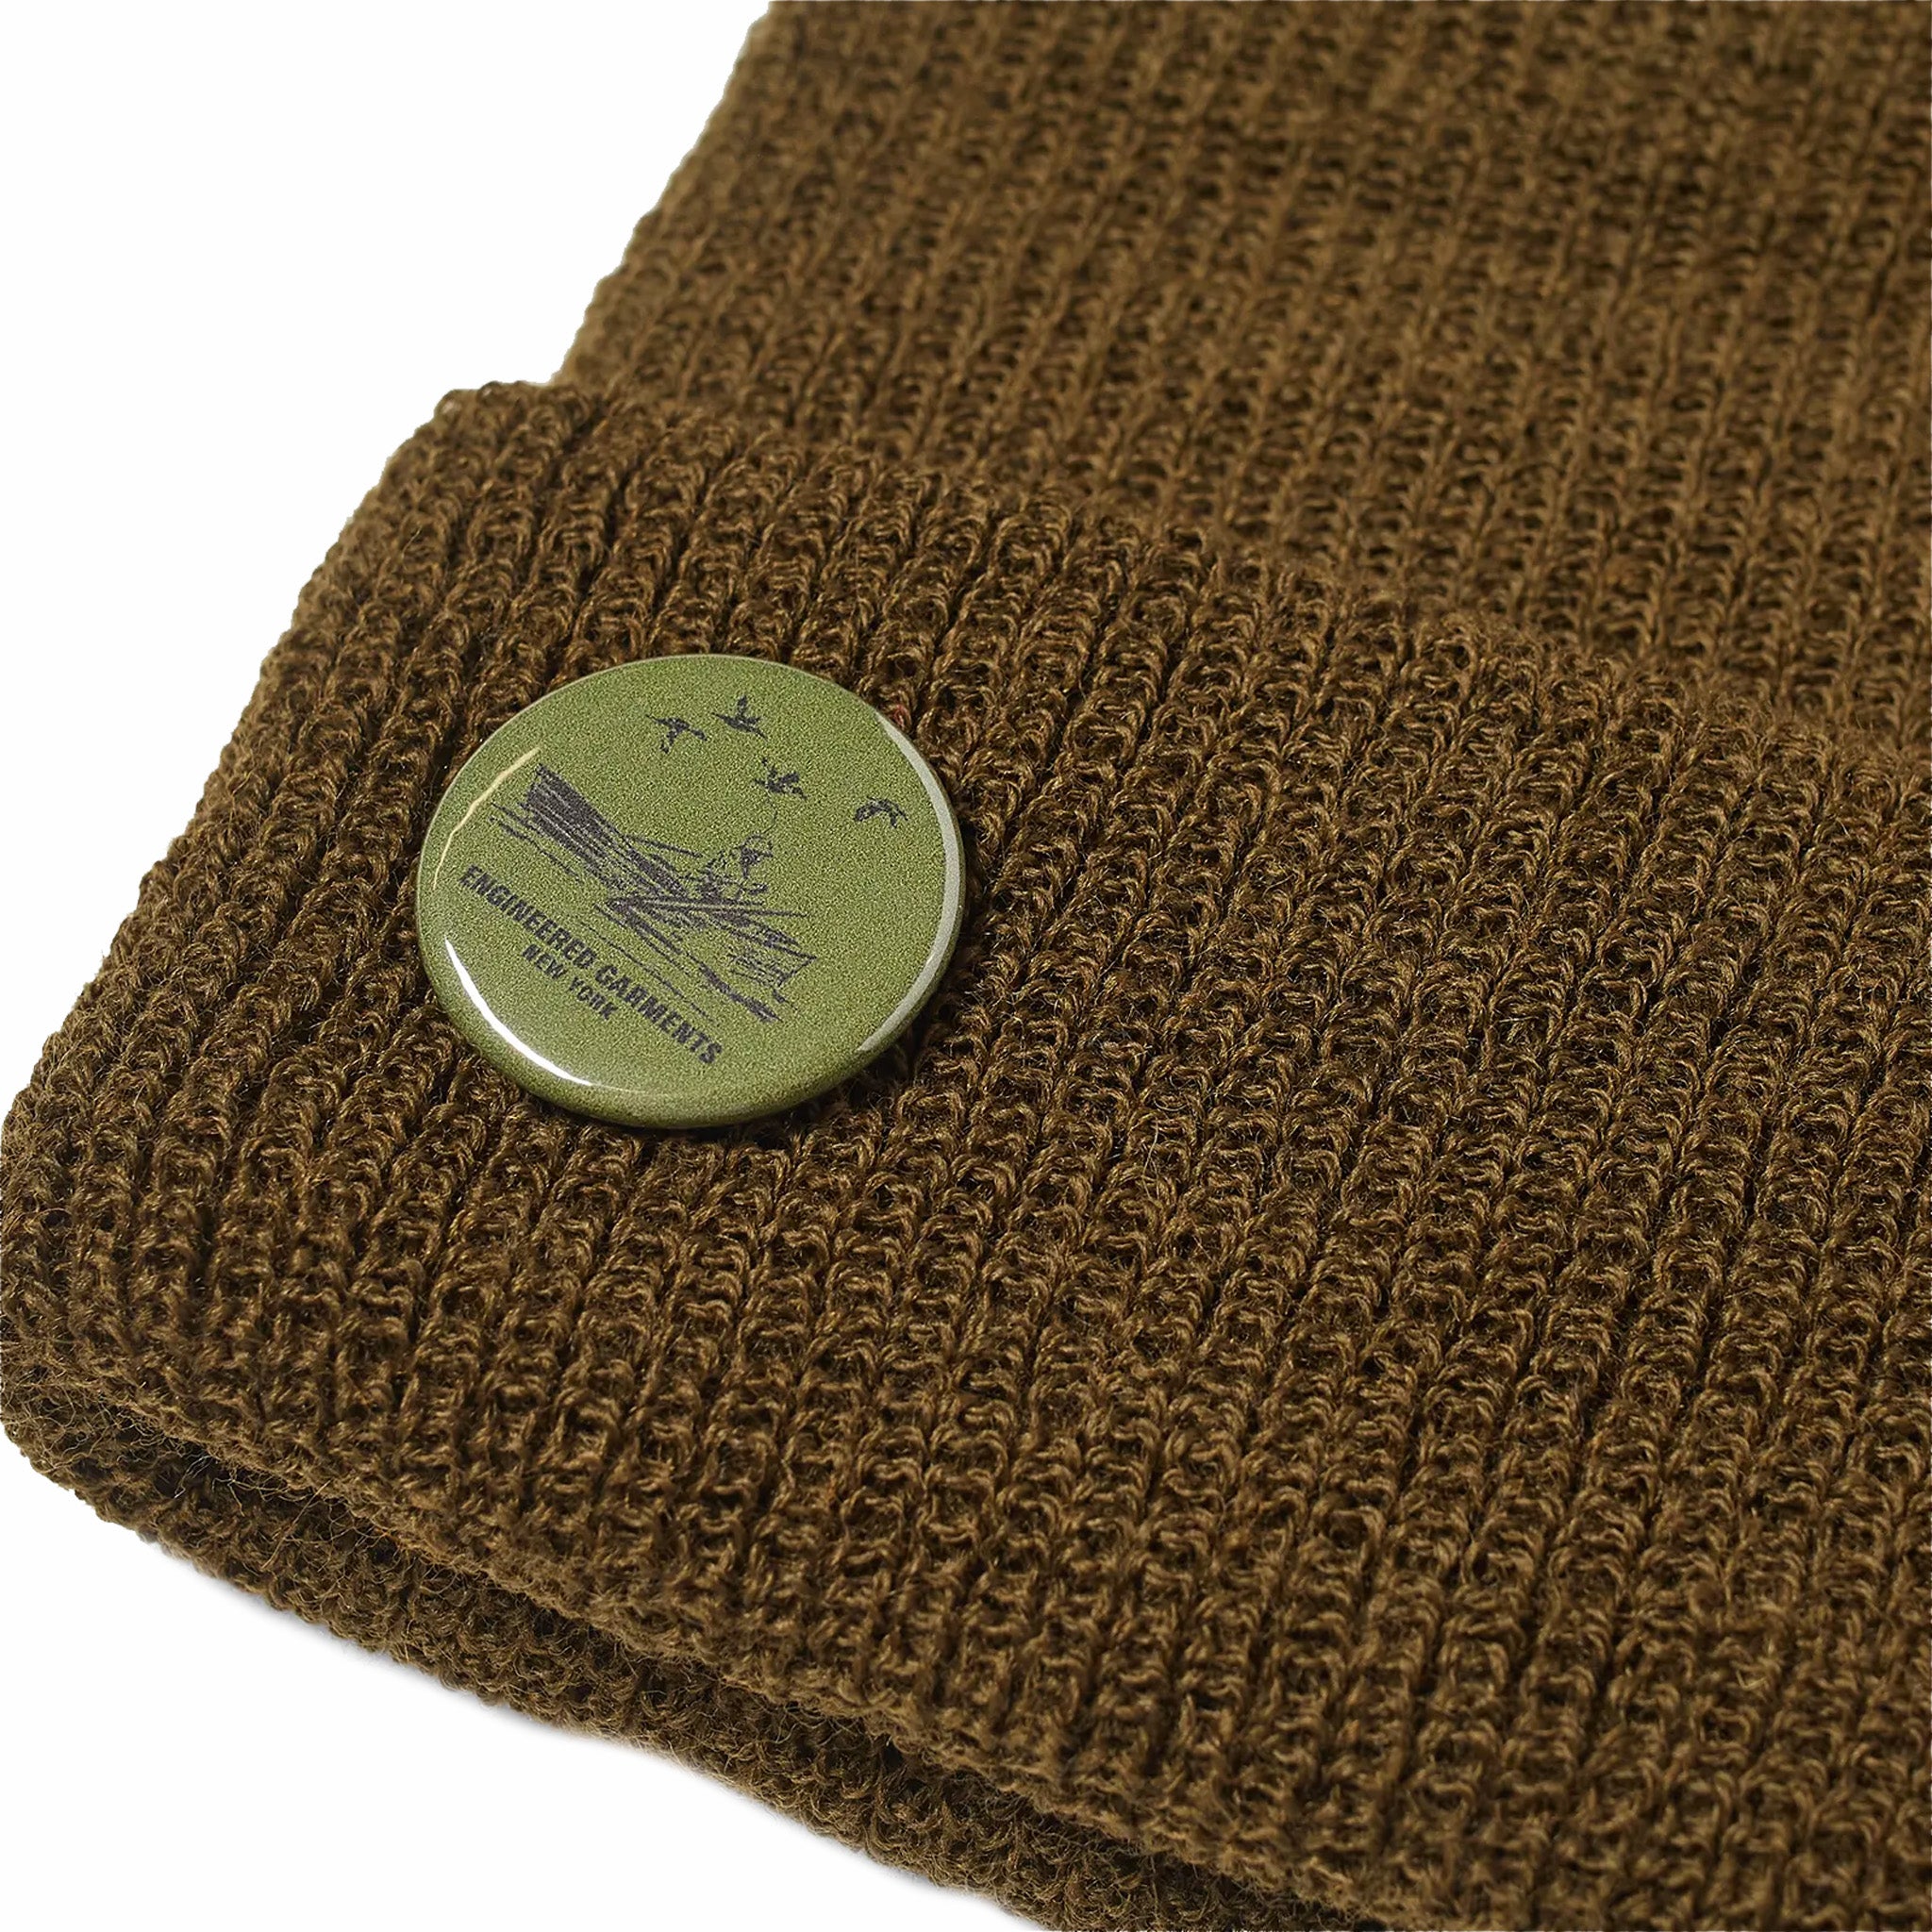 Indumenti ingegnerizzati, Engineered Garments - Berretto con orologio in lana (oliva)